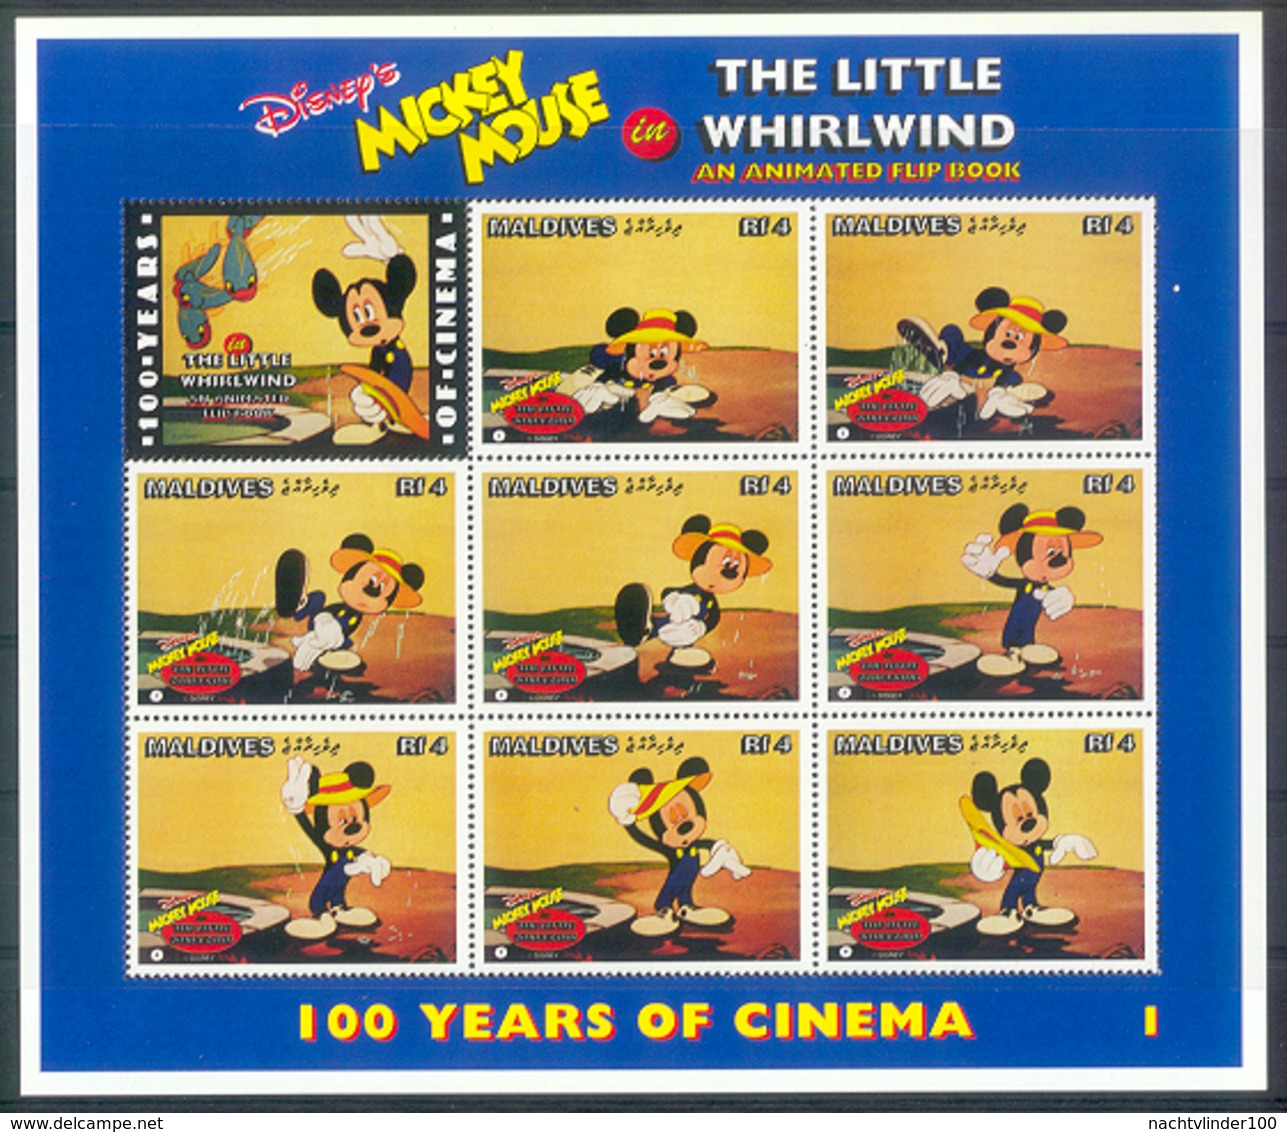 MylA309c WALT DISNEY MICKEY MOUSE THE LITTLE WHIRLWIND CINEMA FILM KINO ANIMATED FLIP BOOK MALDIVES 1996 PF/MNH # - Disney